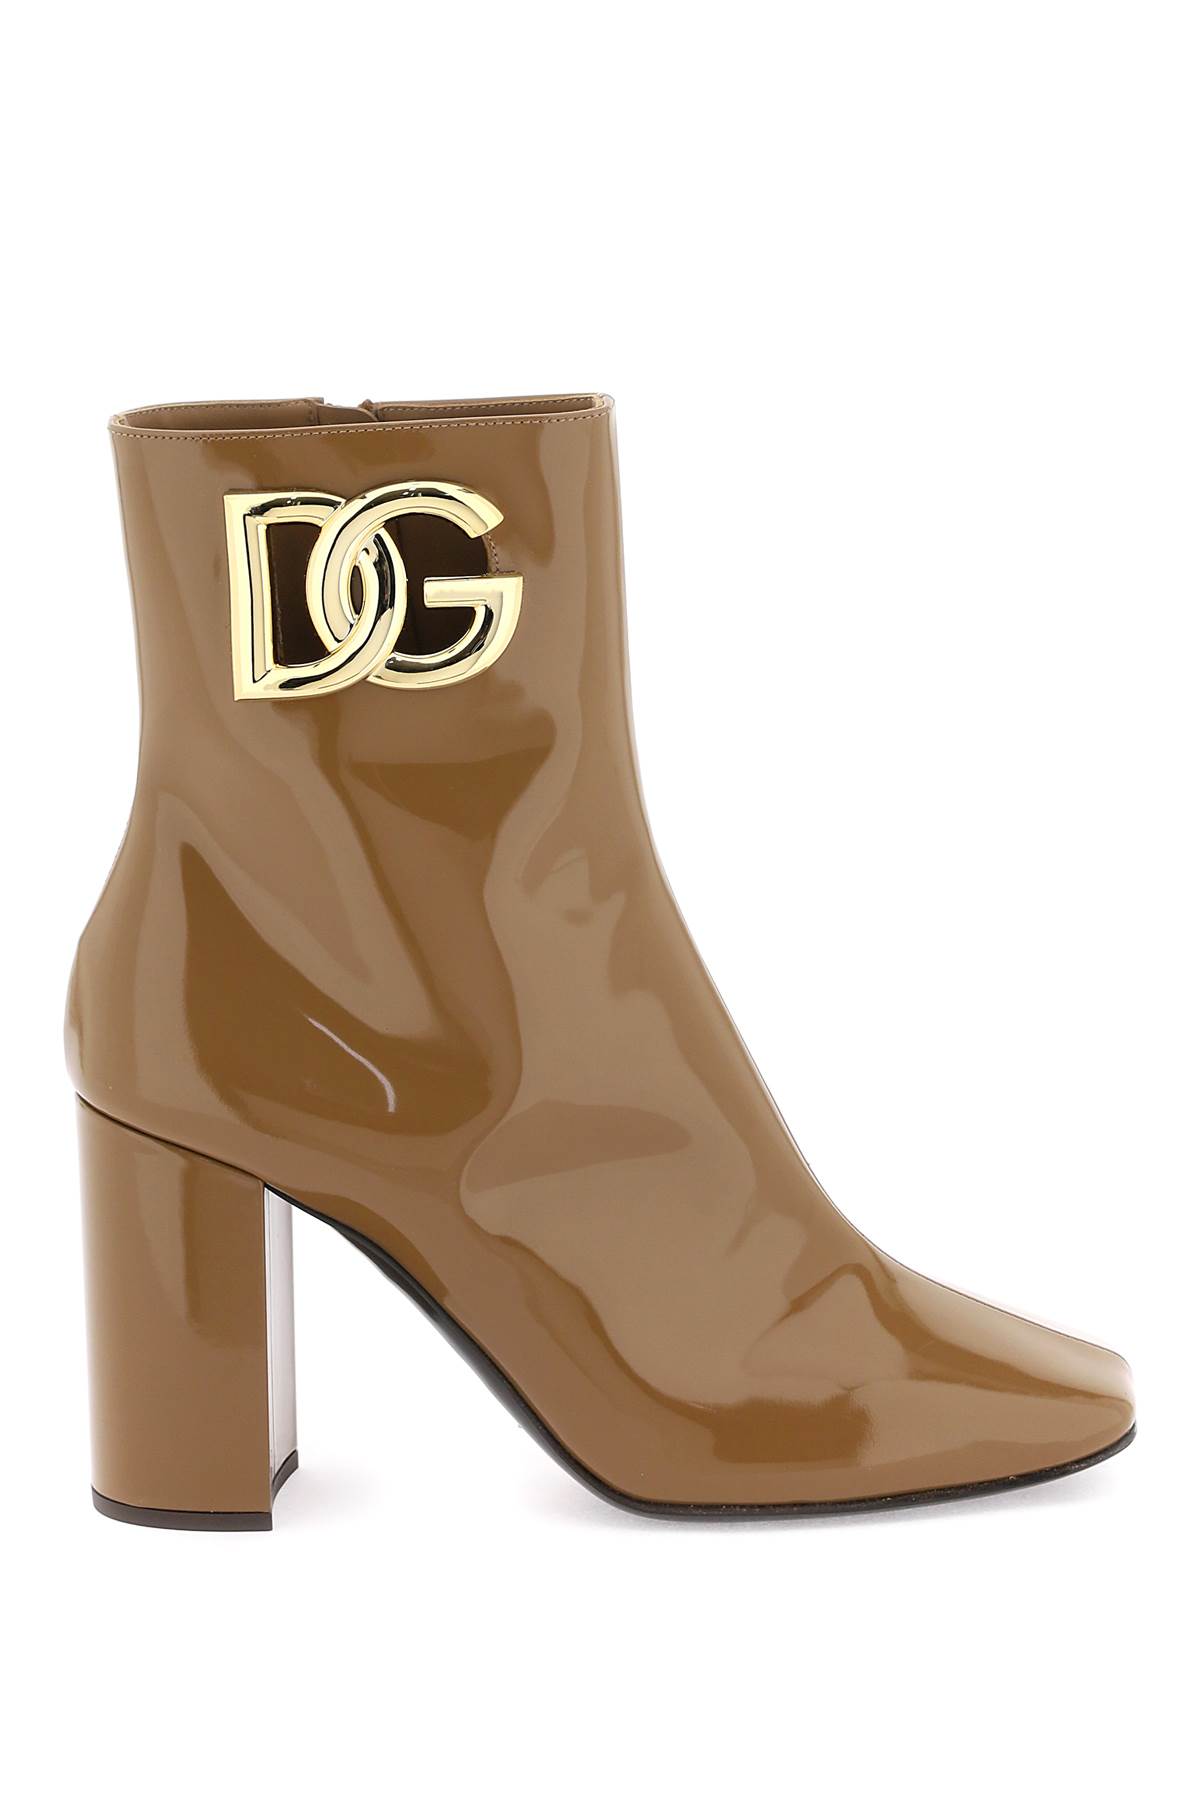 Dolce & Gabbana Dg Logo Ankle Boots